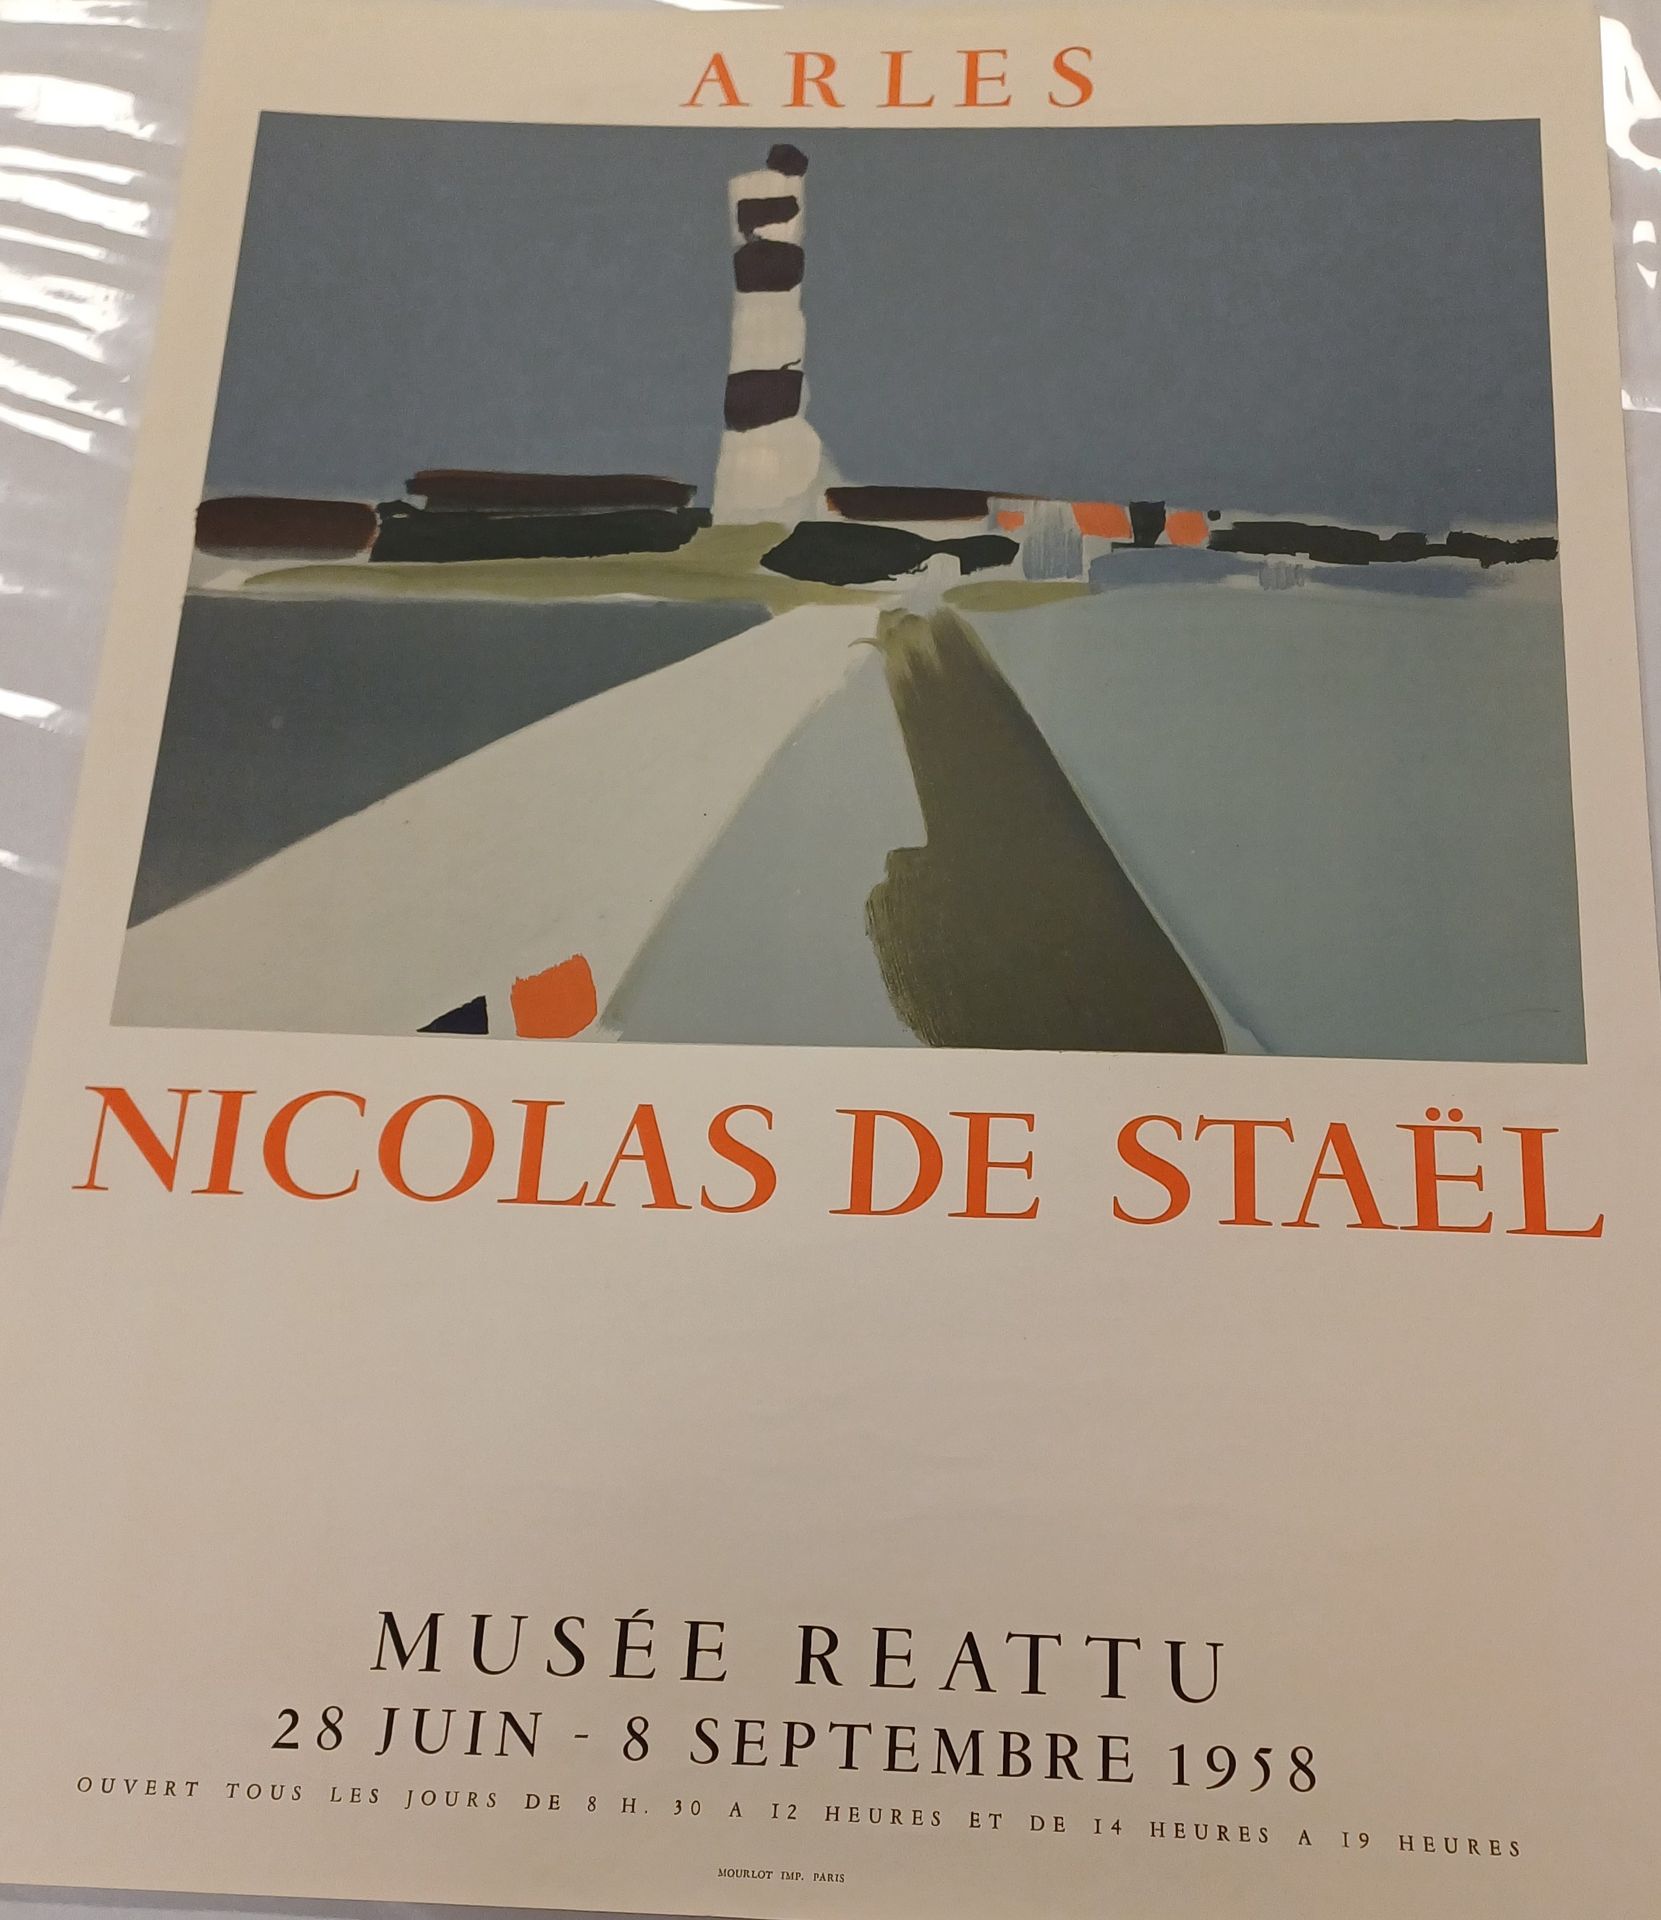 Nicolas de Staël Affiche Nicolas de Staël
Arles 1958
67 x 51,5 cm